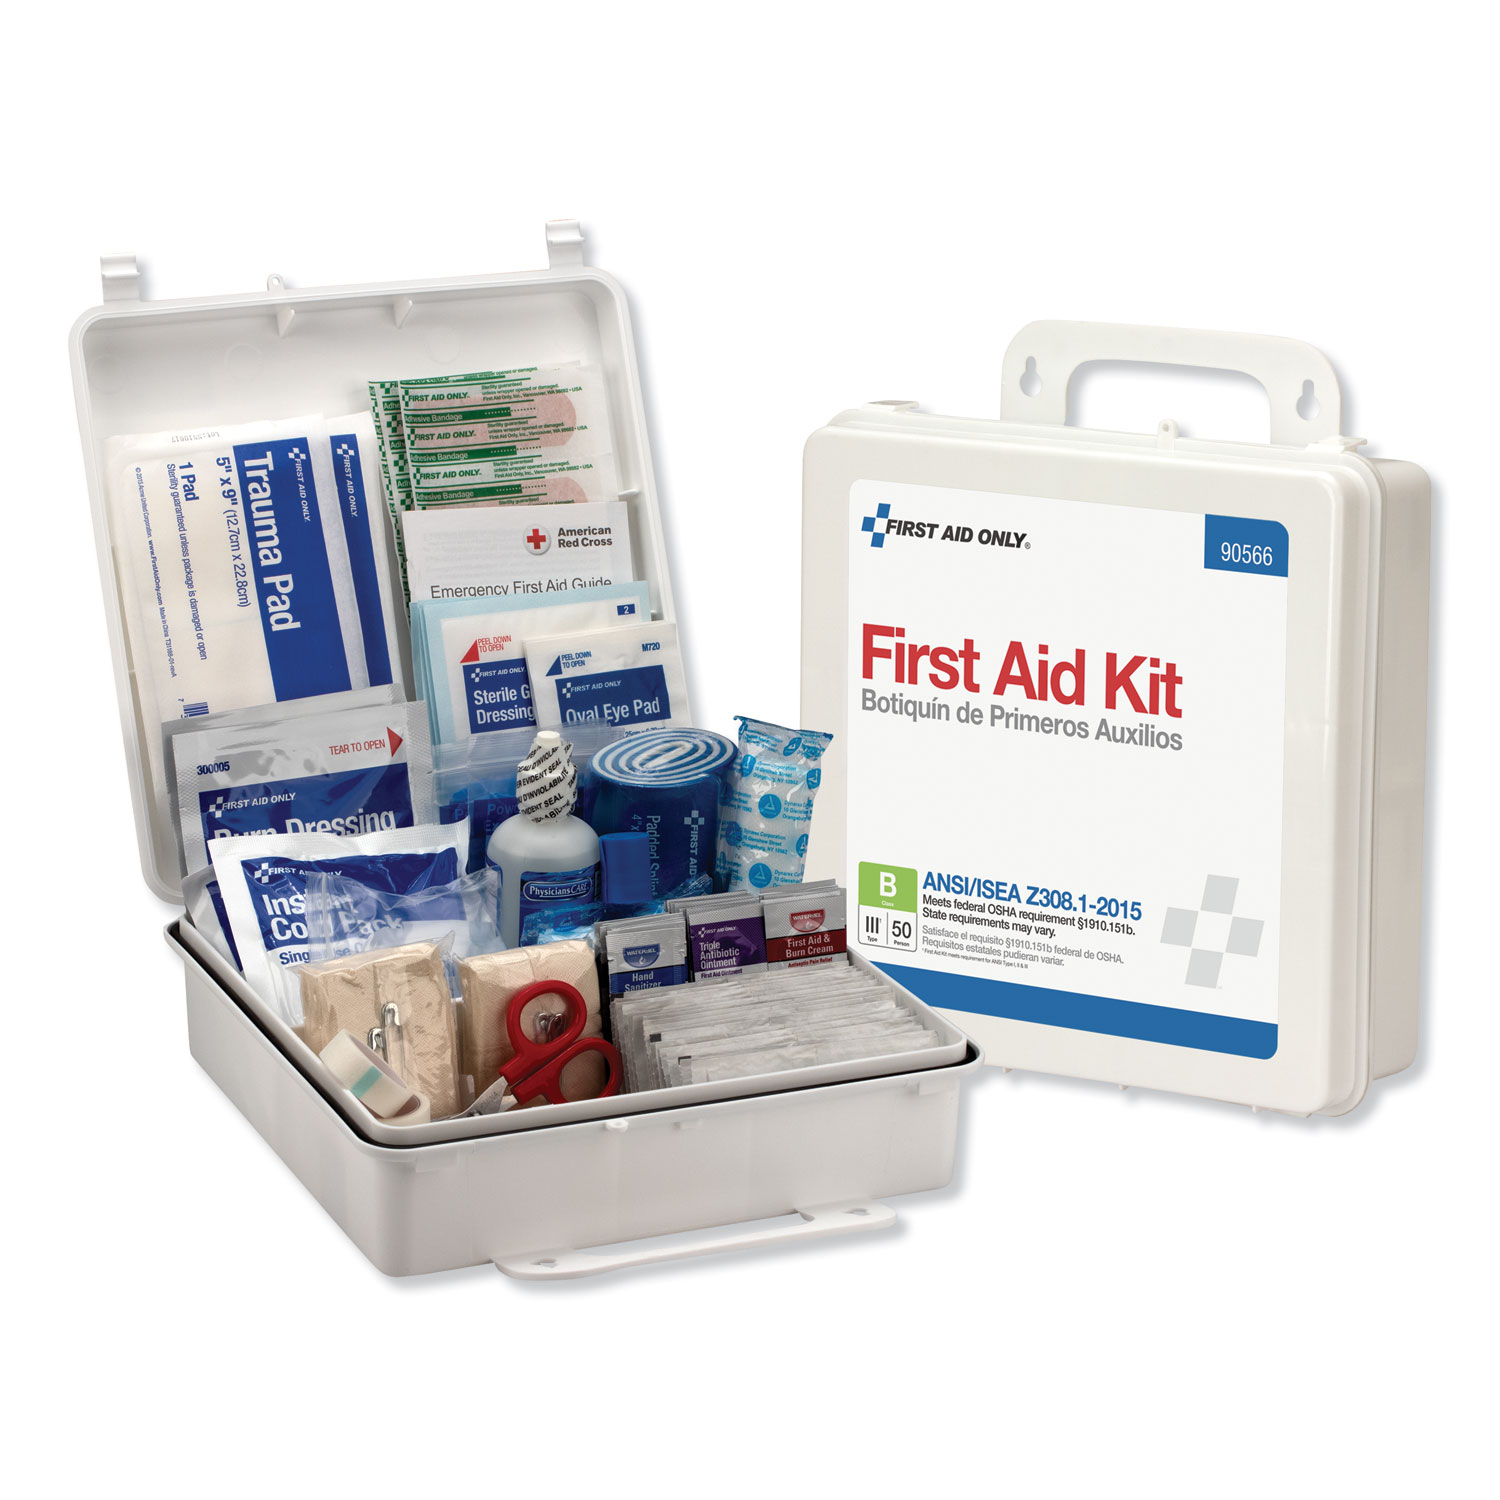 Class B 50 Person Bulk ANSI B, First Aid Kit-Type III